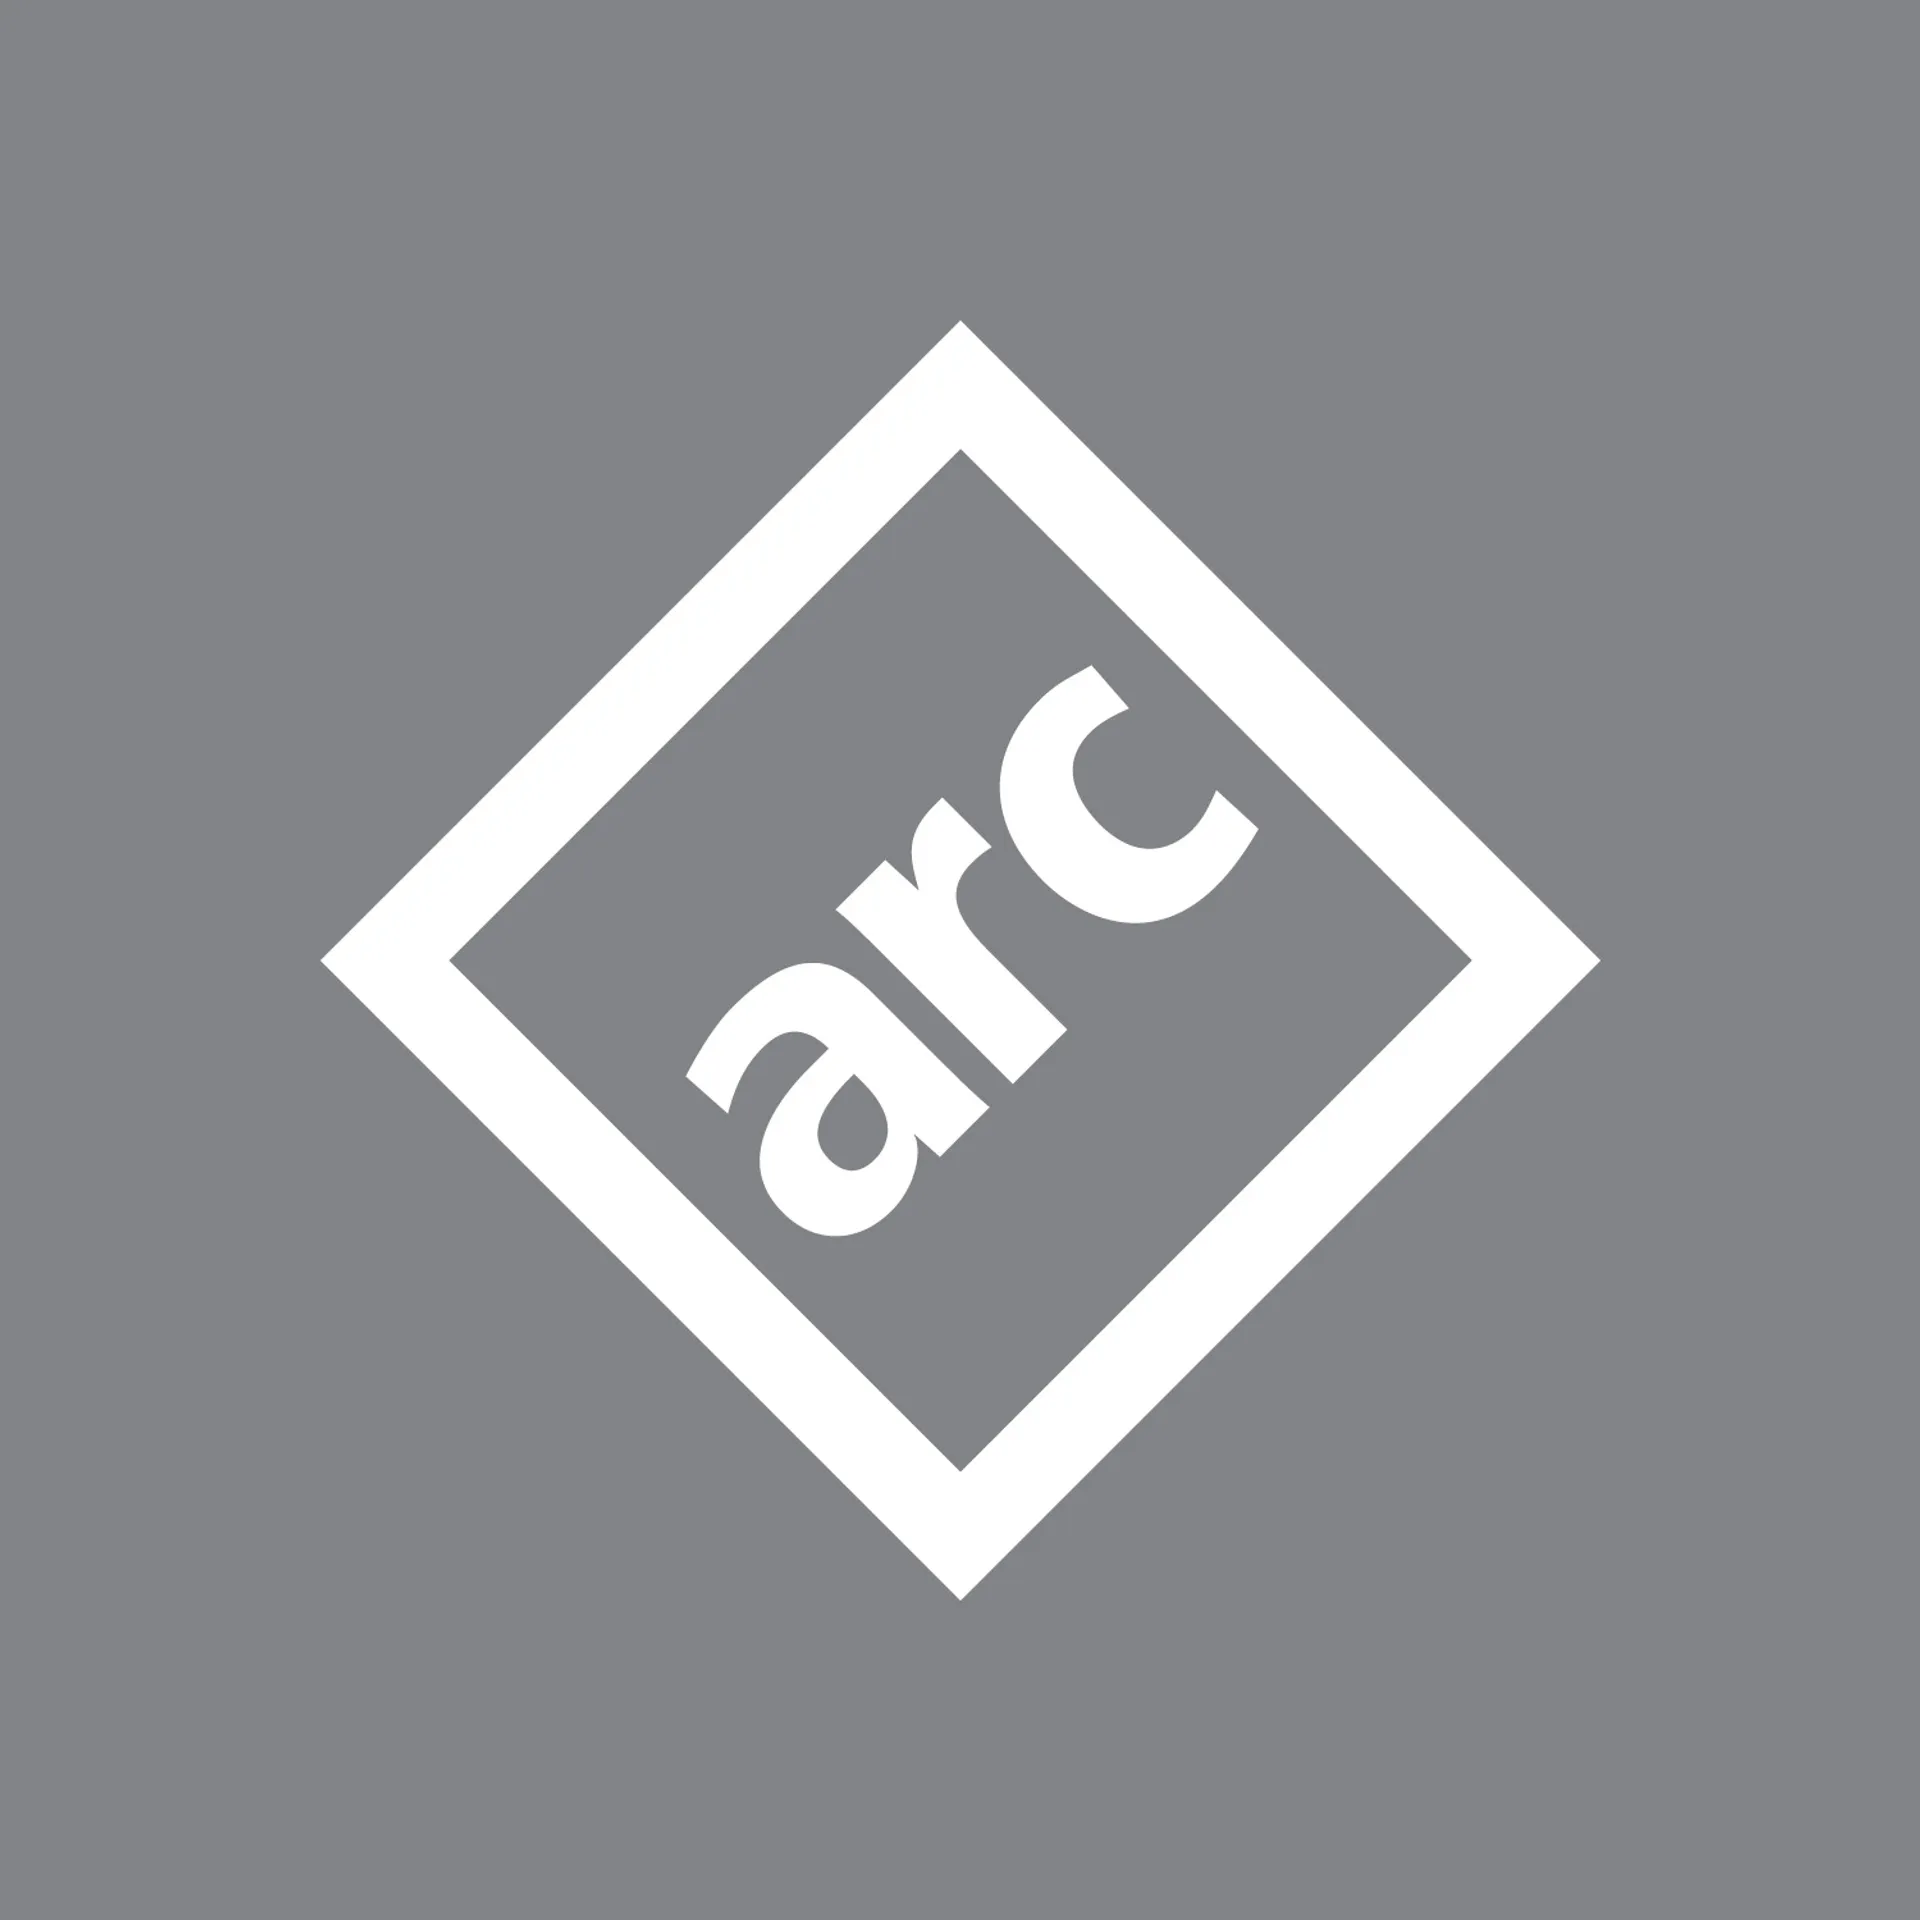 ARC Logo on grey background